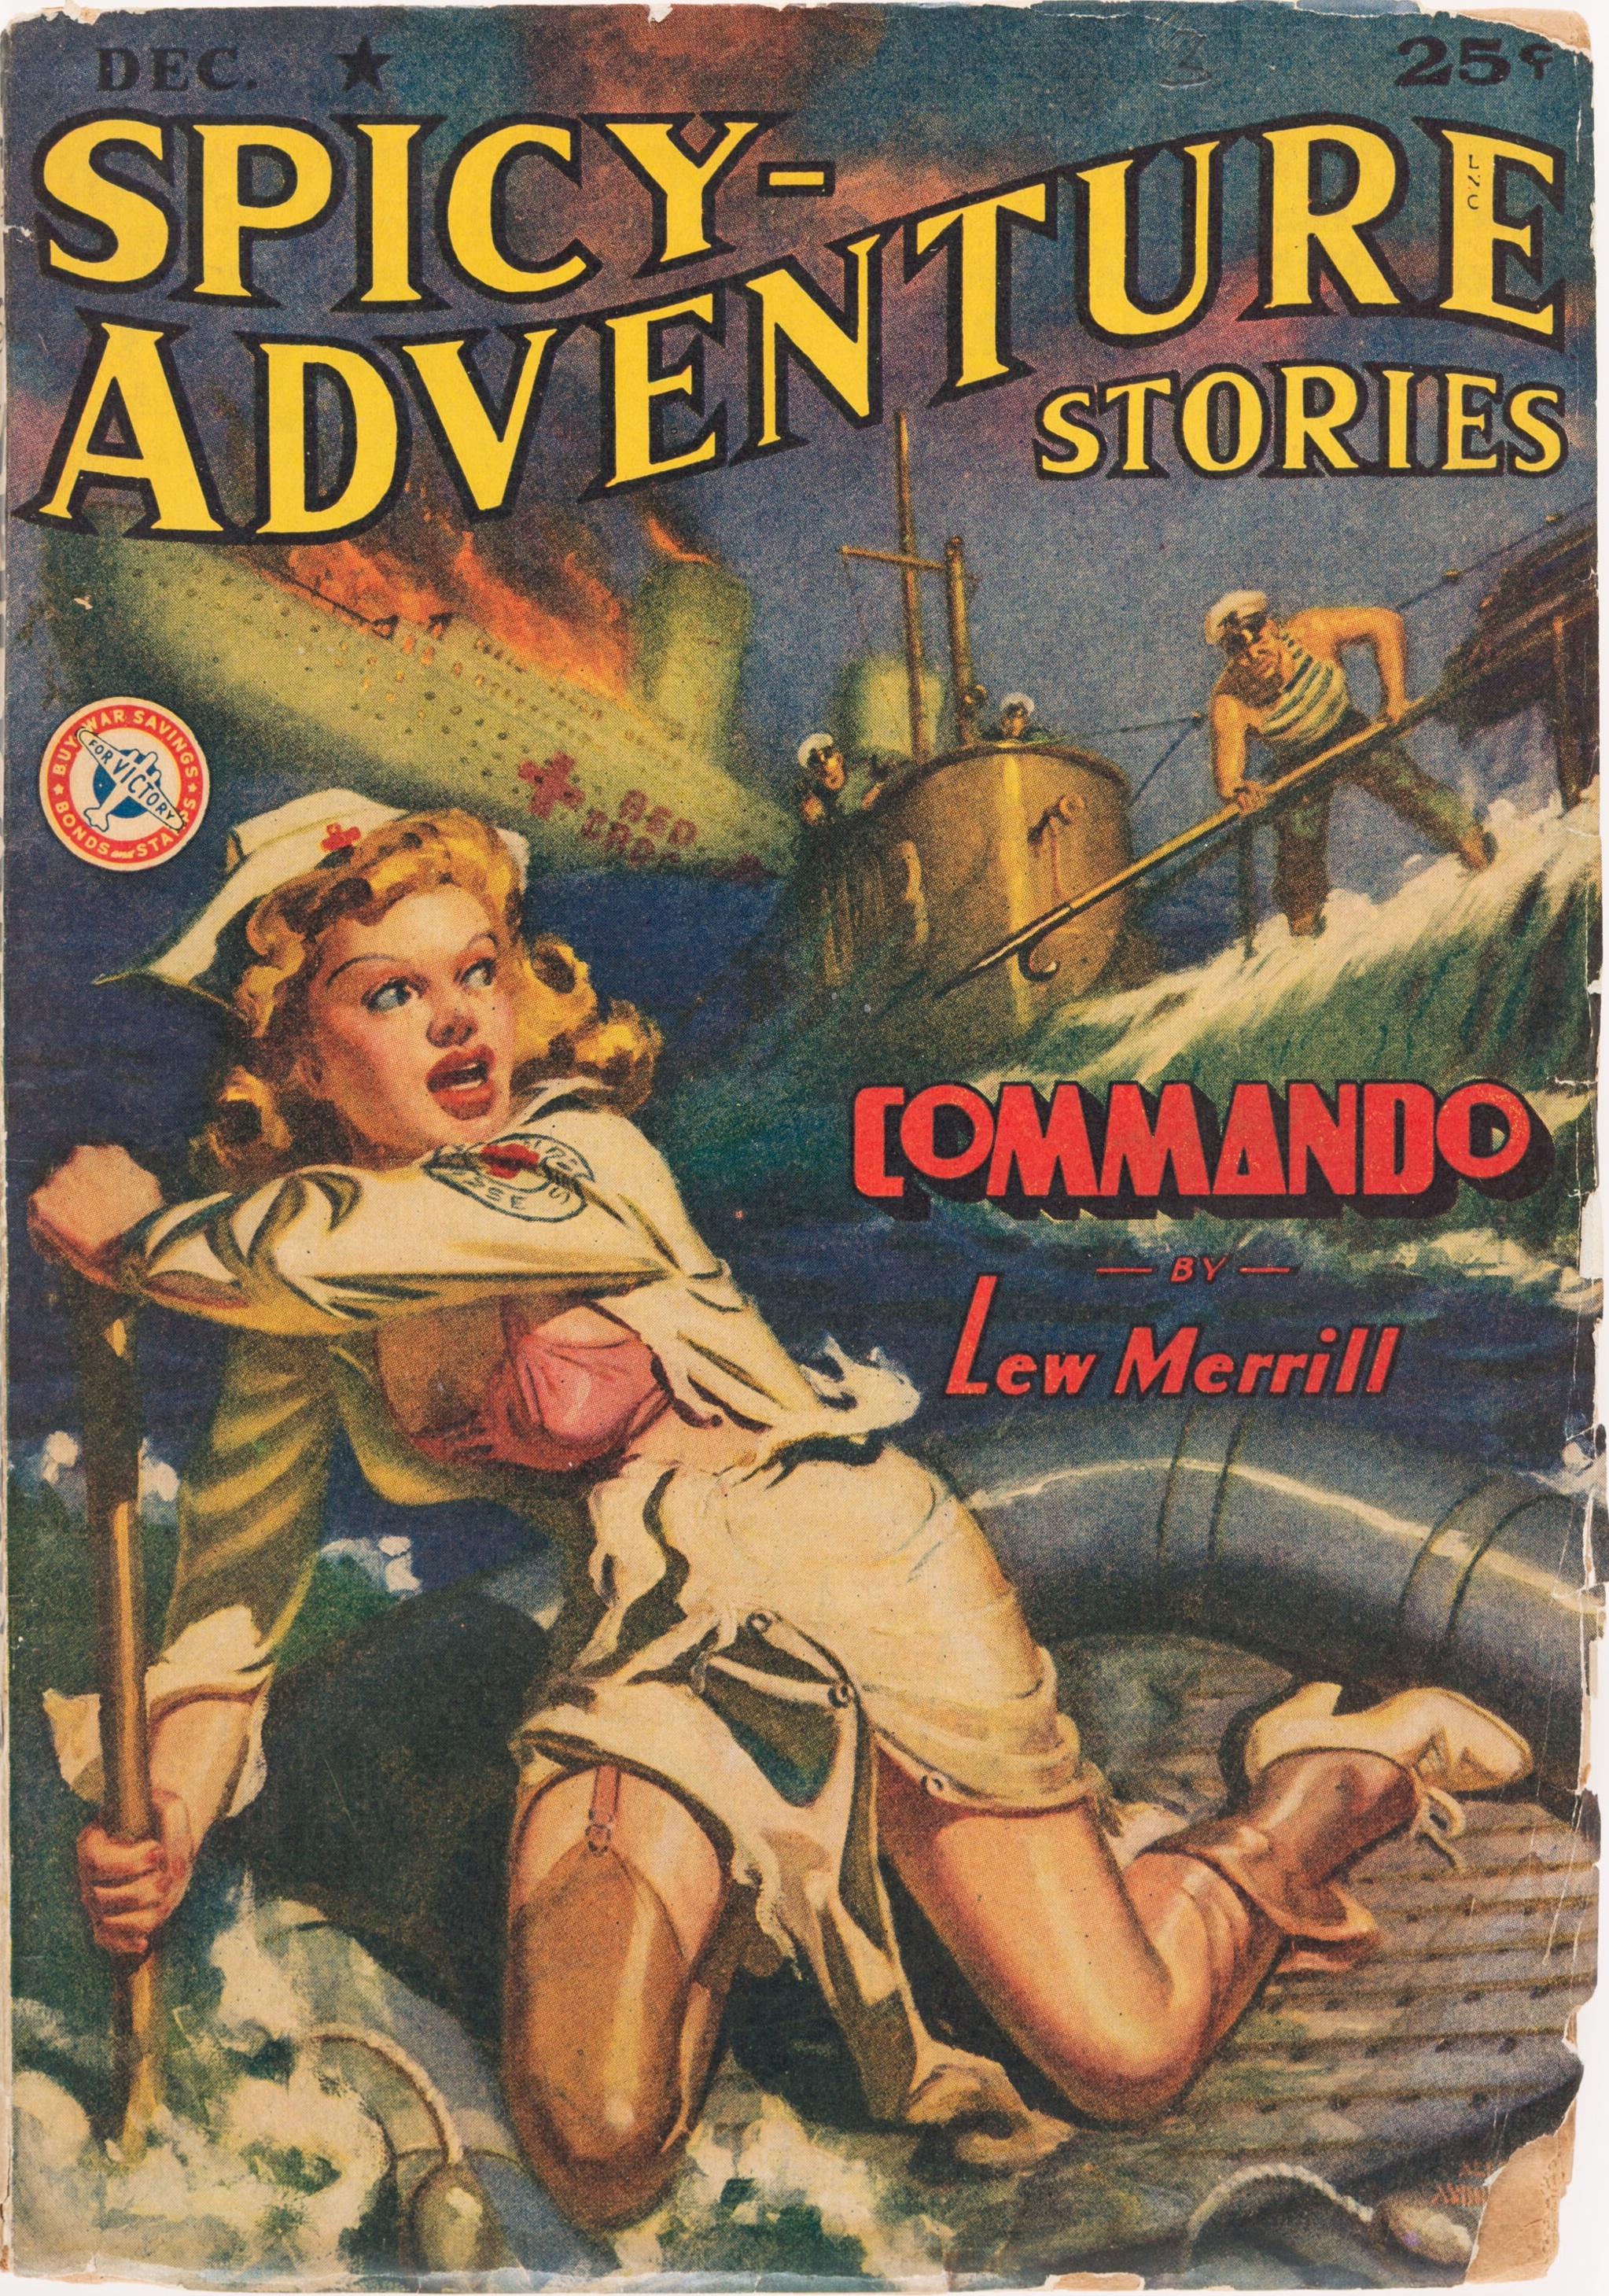 Spicy Adventure Stories - December 1942